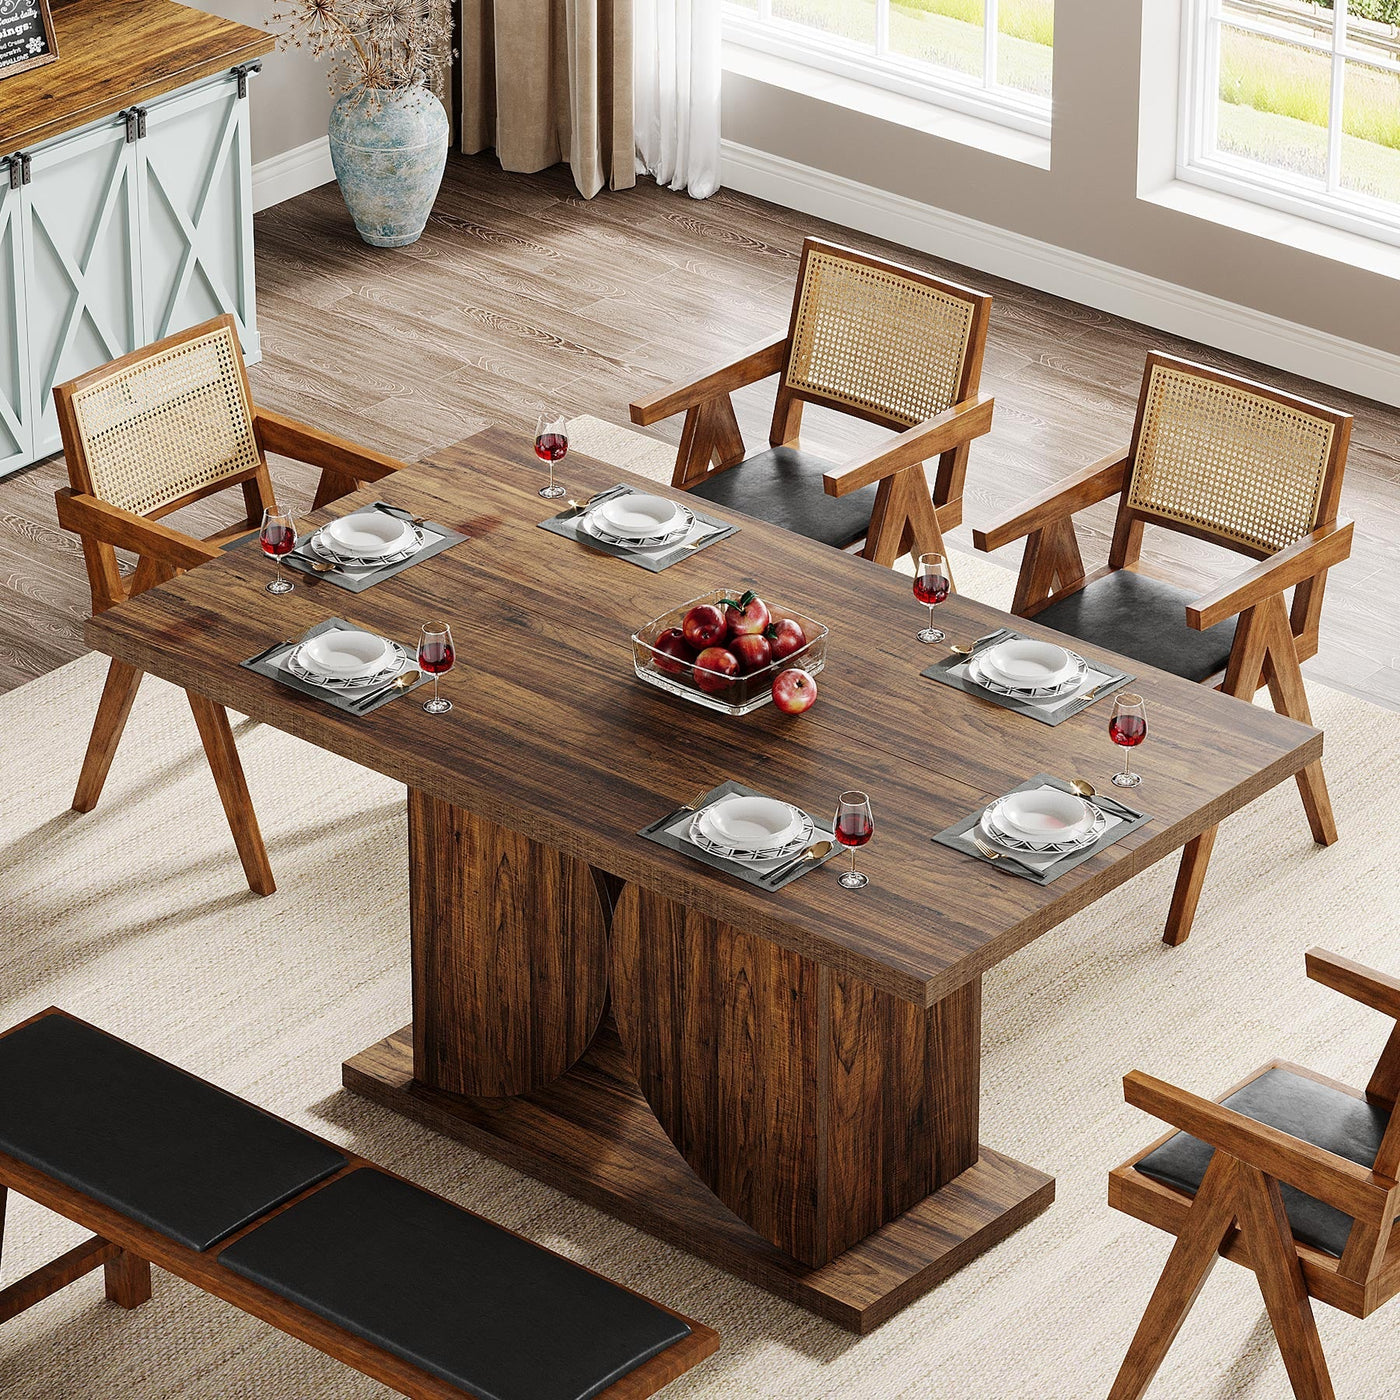 Mesa de comedor Luisa | Mesa de cocina rectangular de madera de estilo rústico para 4-6 personas